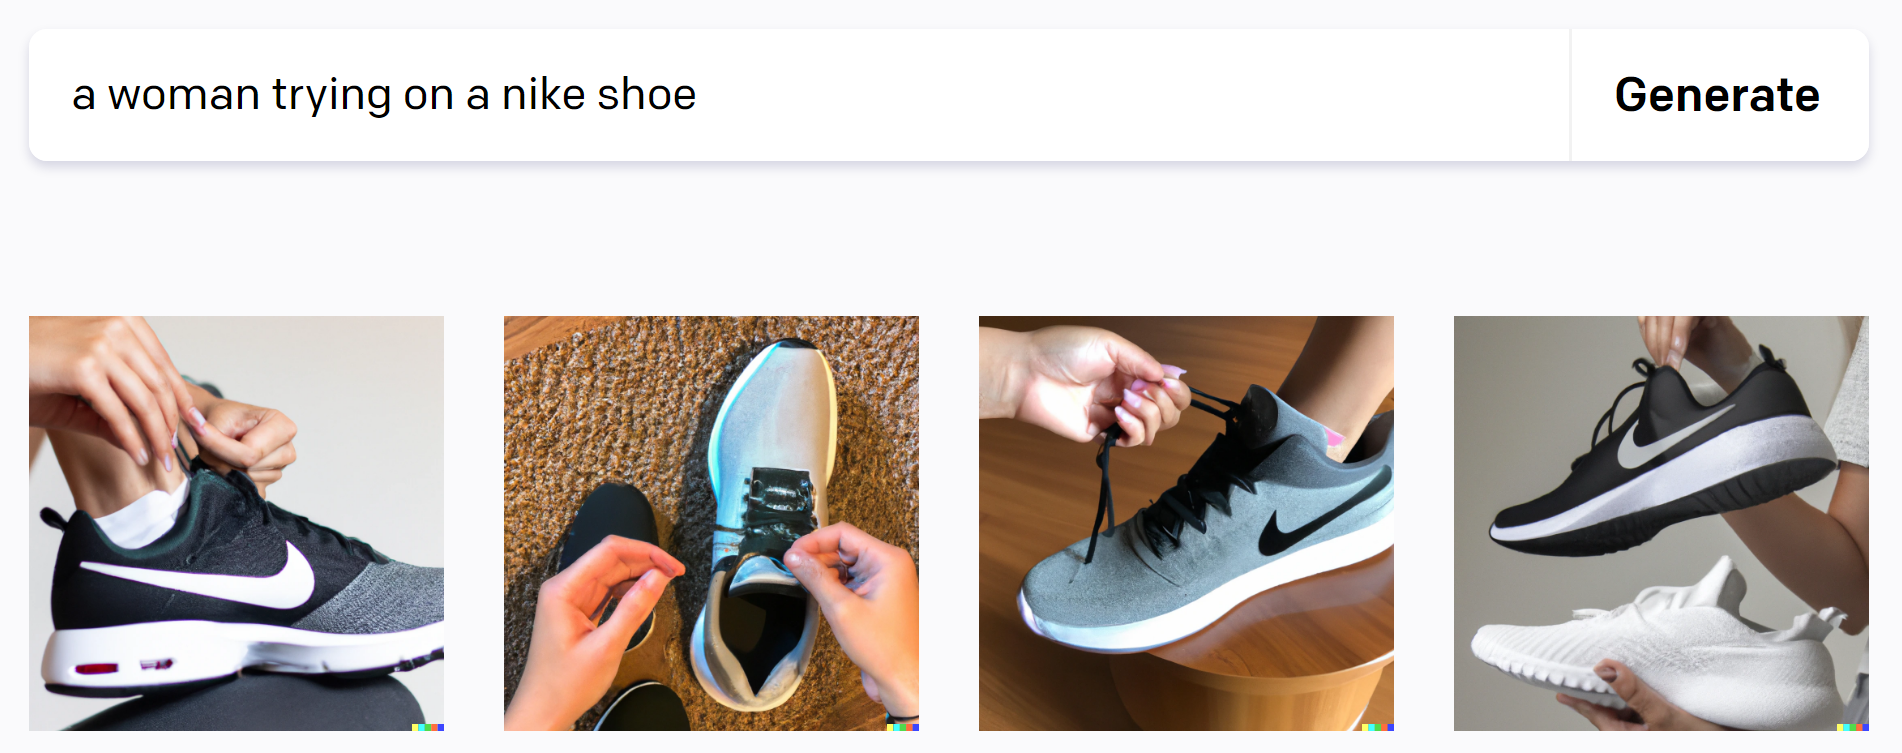 Alat desain web AI dapat digunakan untuk menghasilkan grafik seperti seorang wanita mencoba sepatu Nike (seperti yang ditunjukkan di sini).